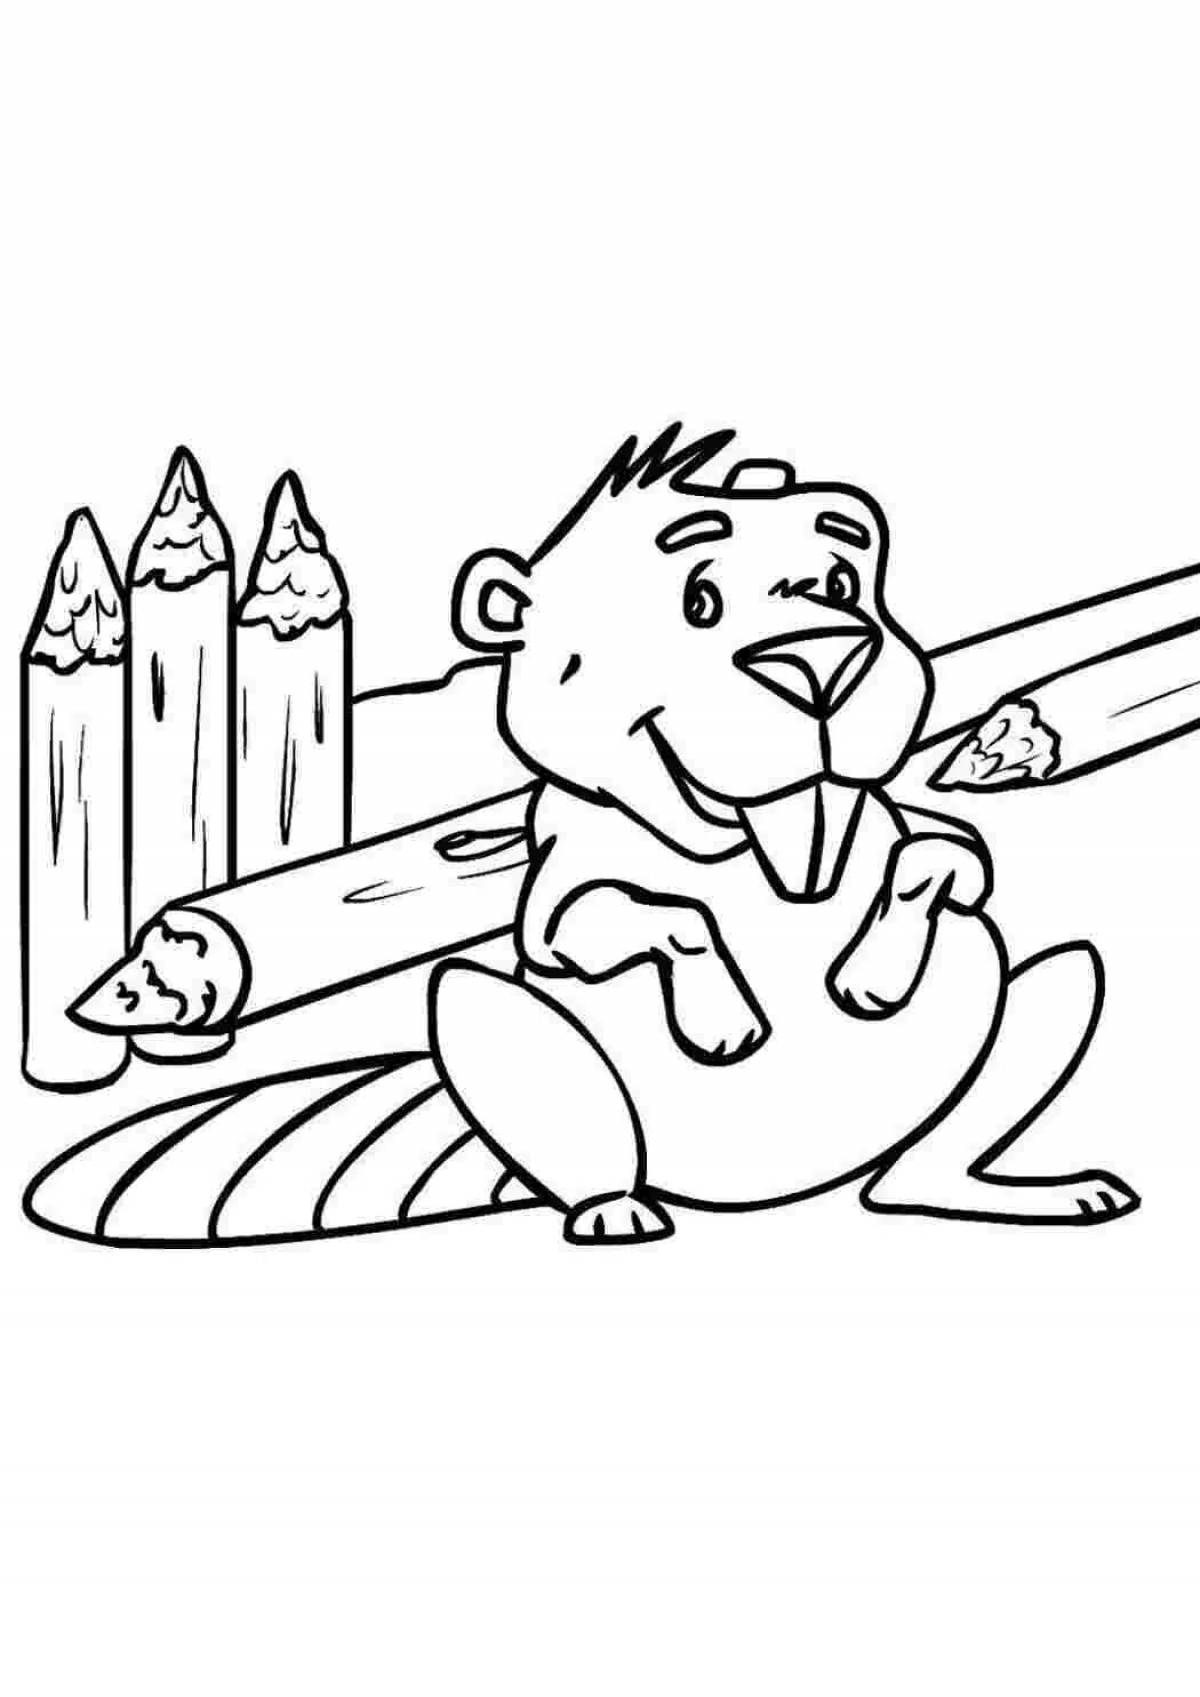 Magic beaver coloring page